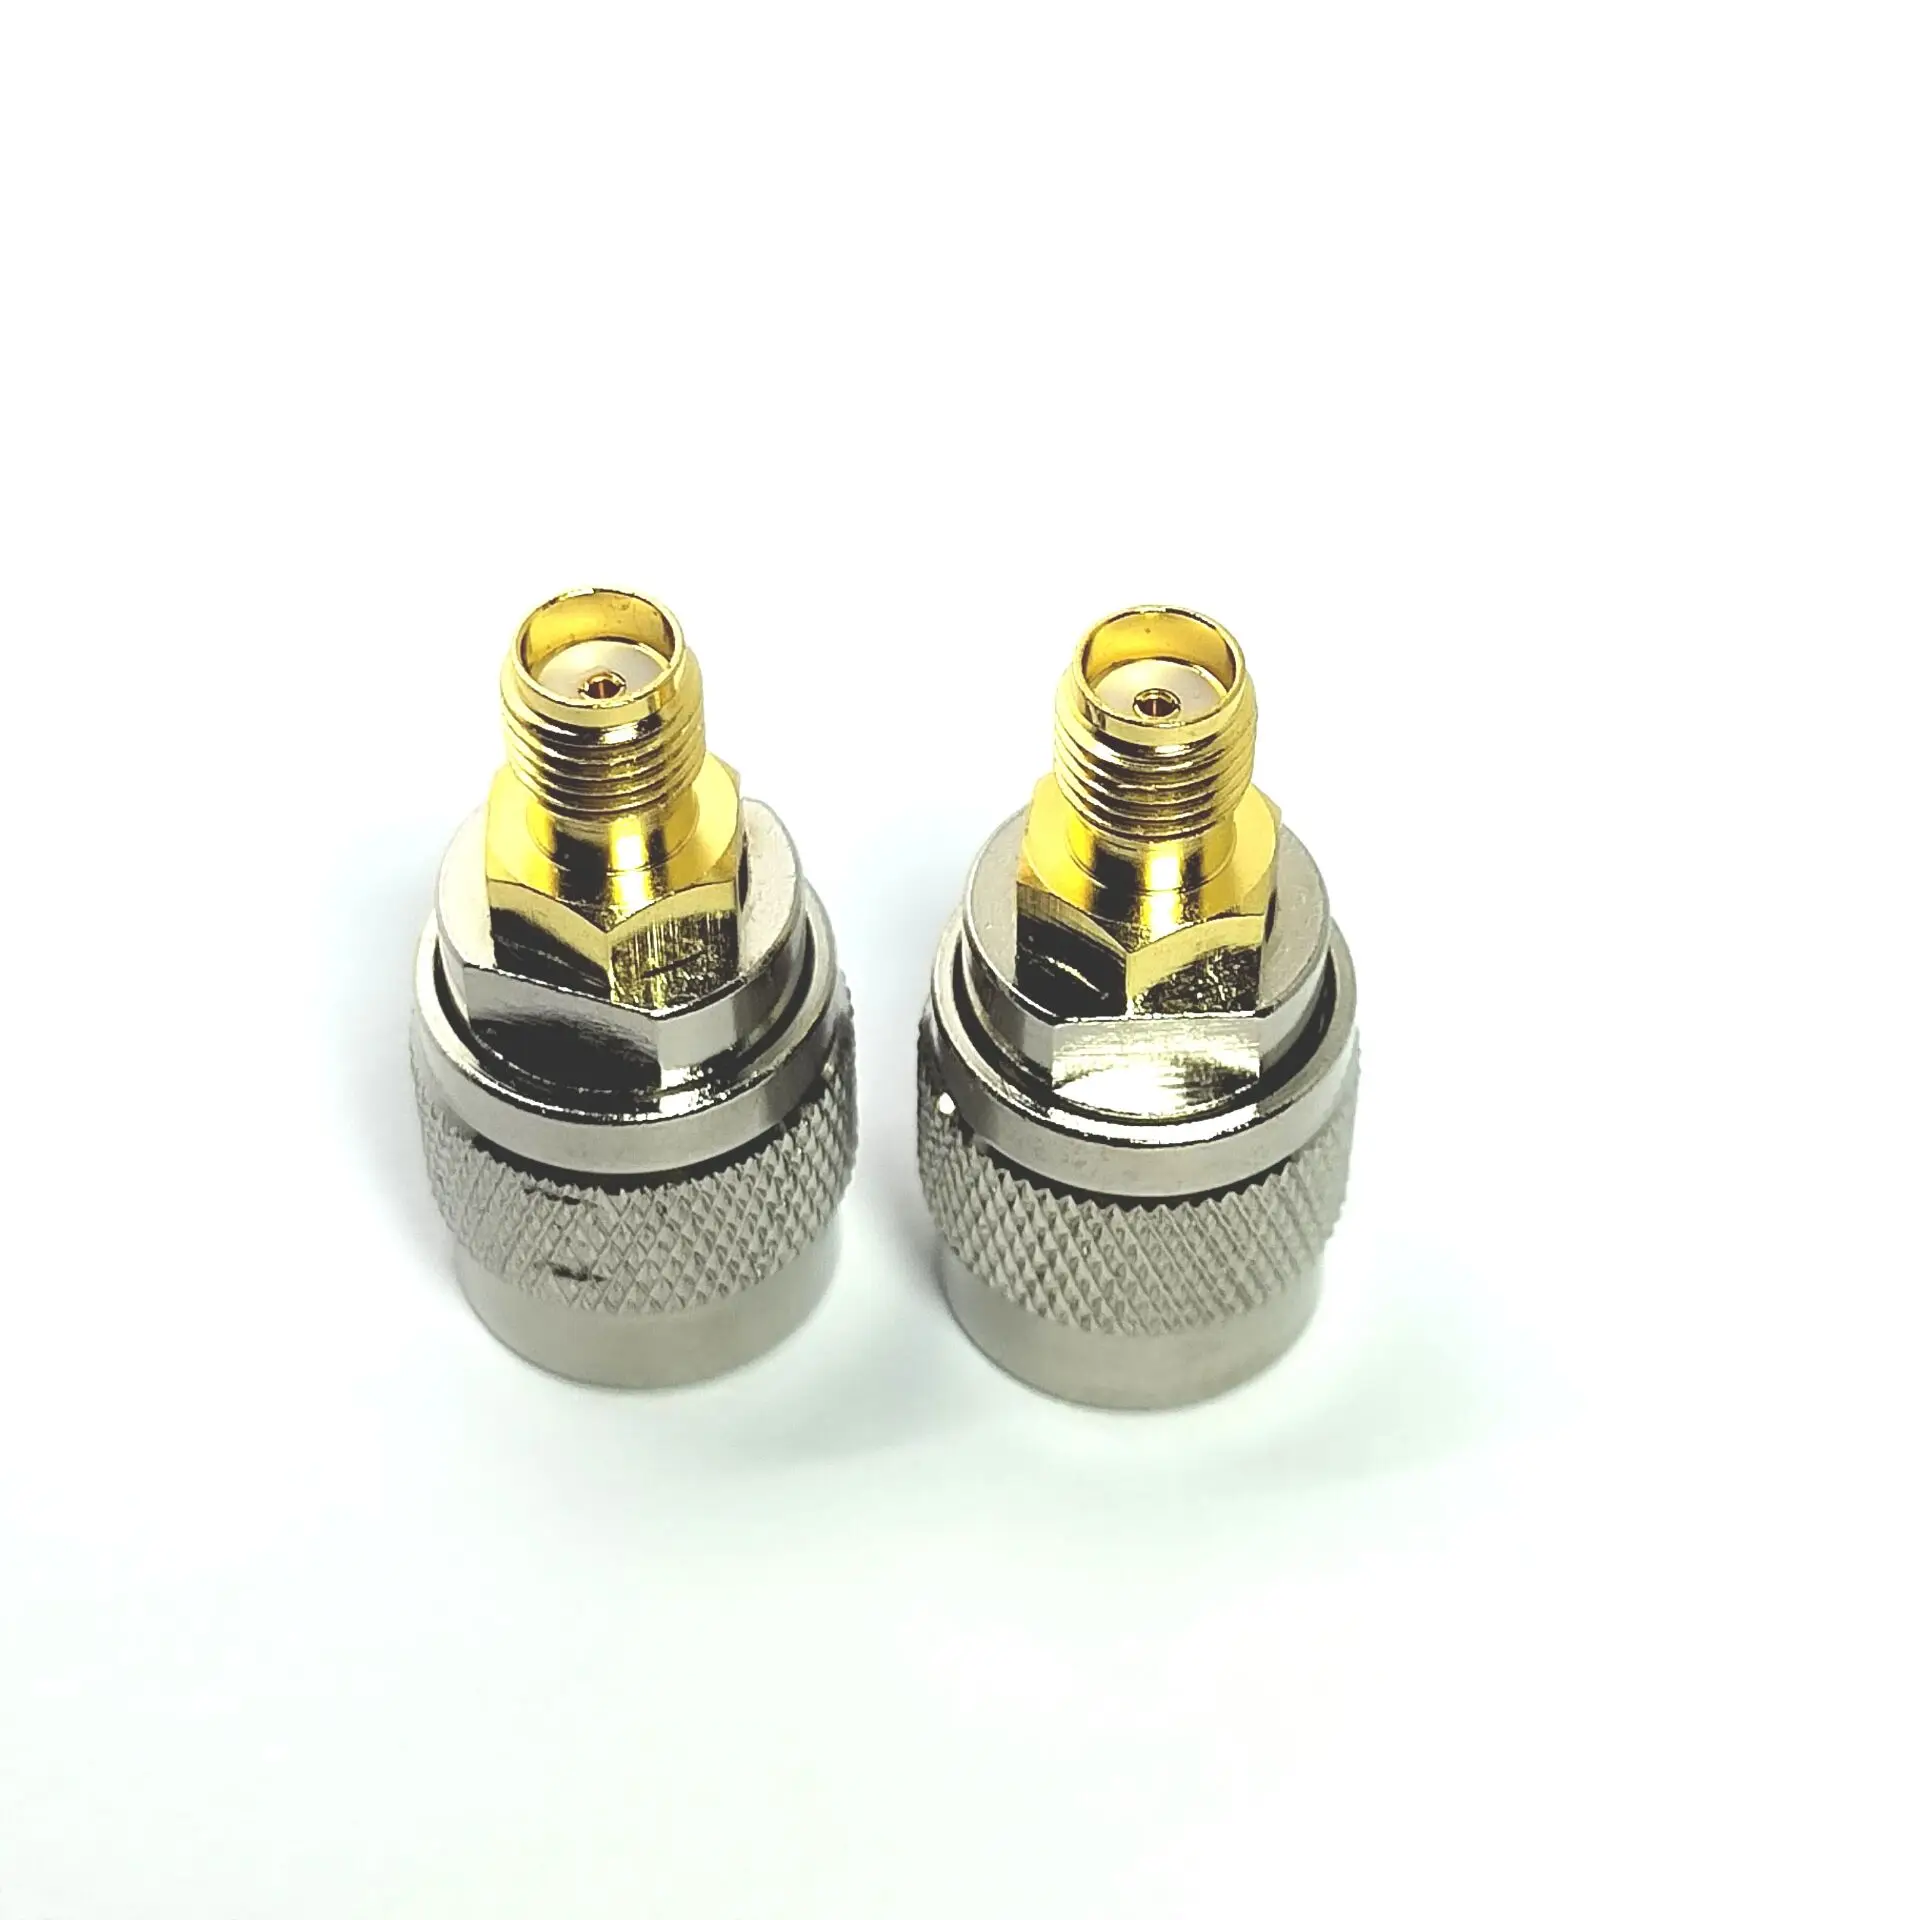 RF adaptor sma female jack  to RP  tnc male plug  rf coaxial adapter manufacture